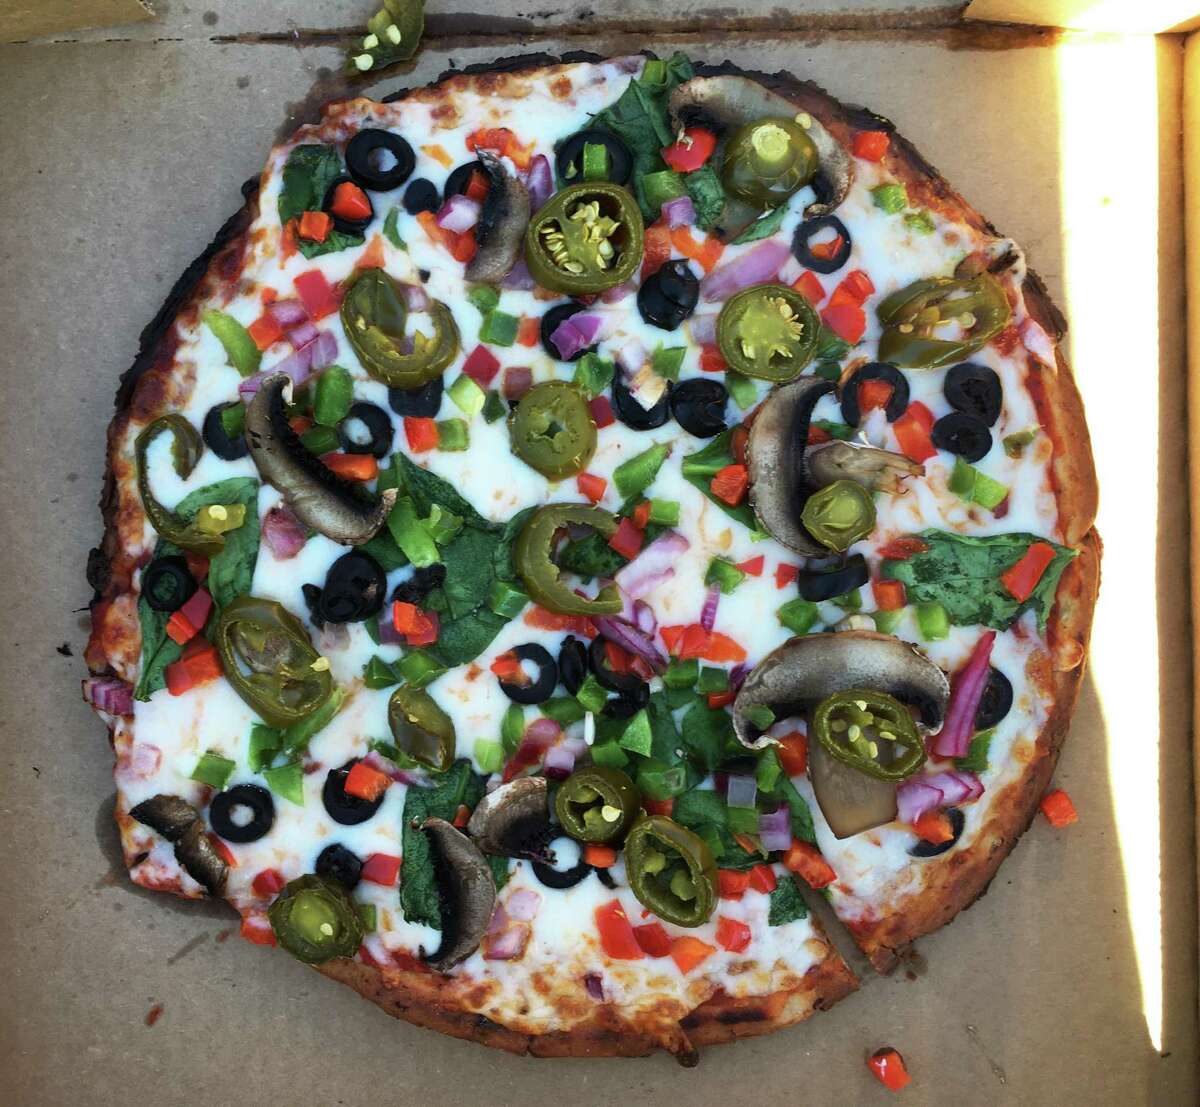 The Veggie Lover's pizza at Nico's Pizzeria